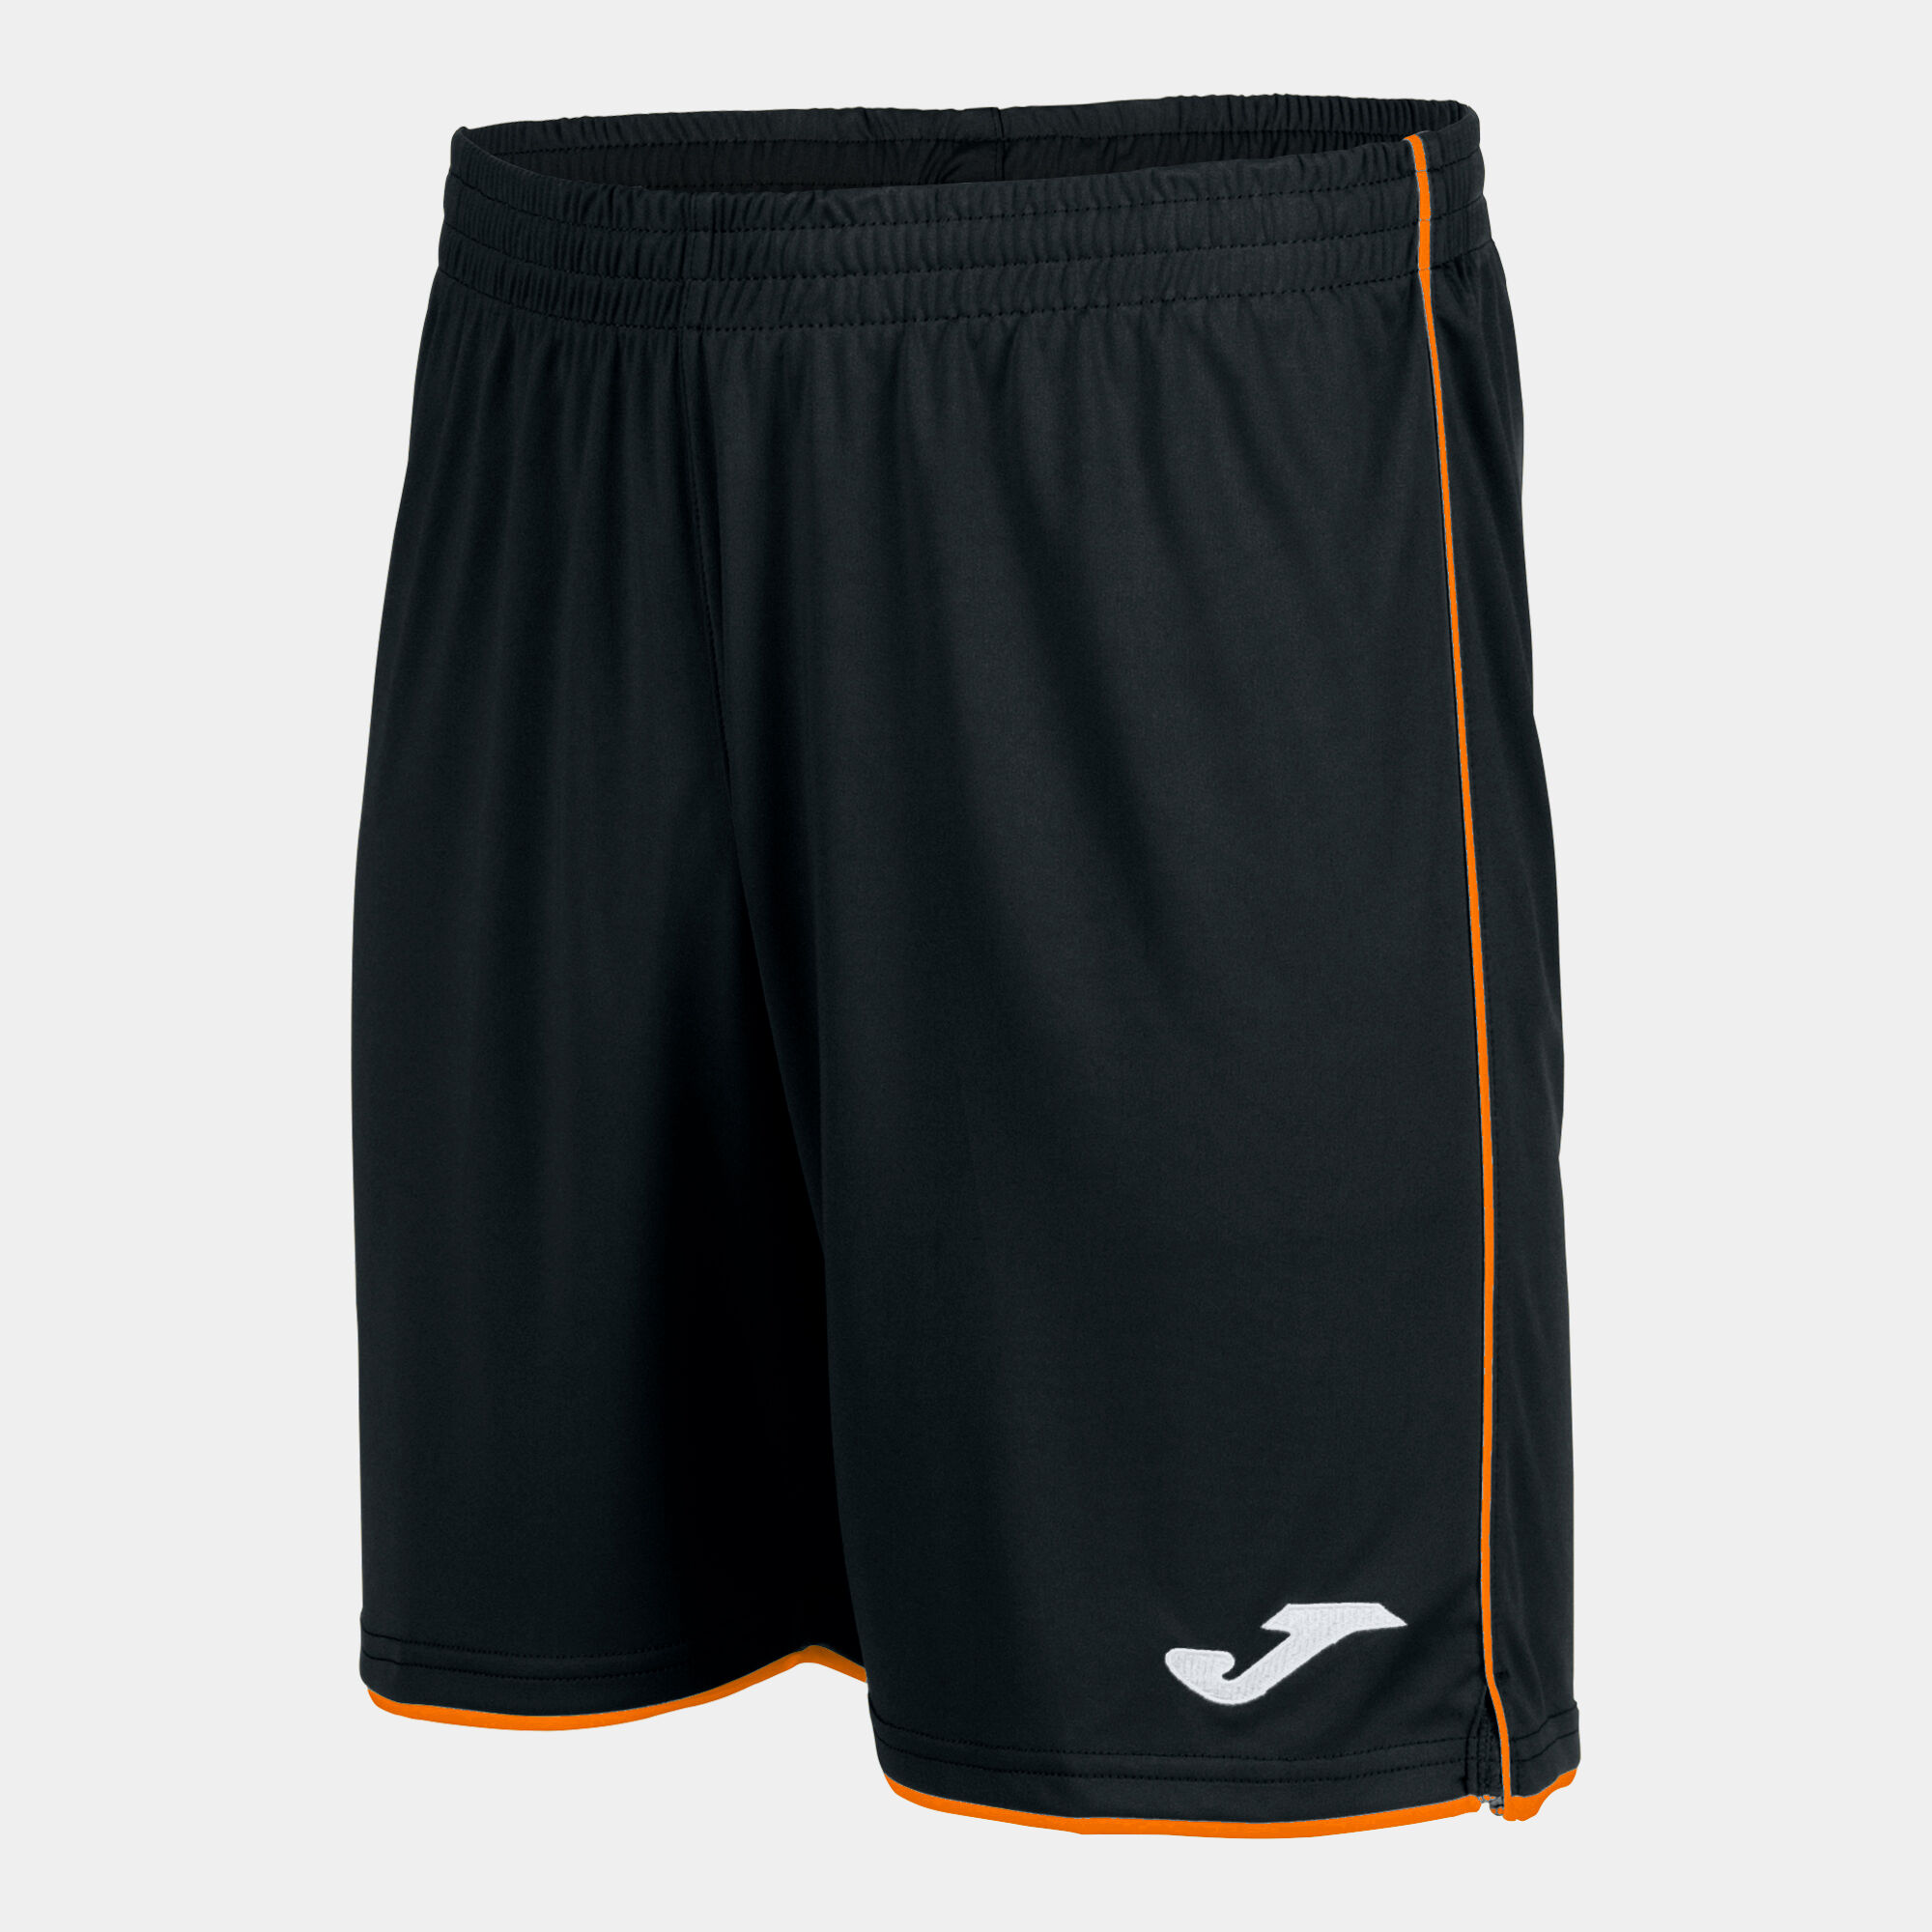 Shorts man Liga black orange